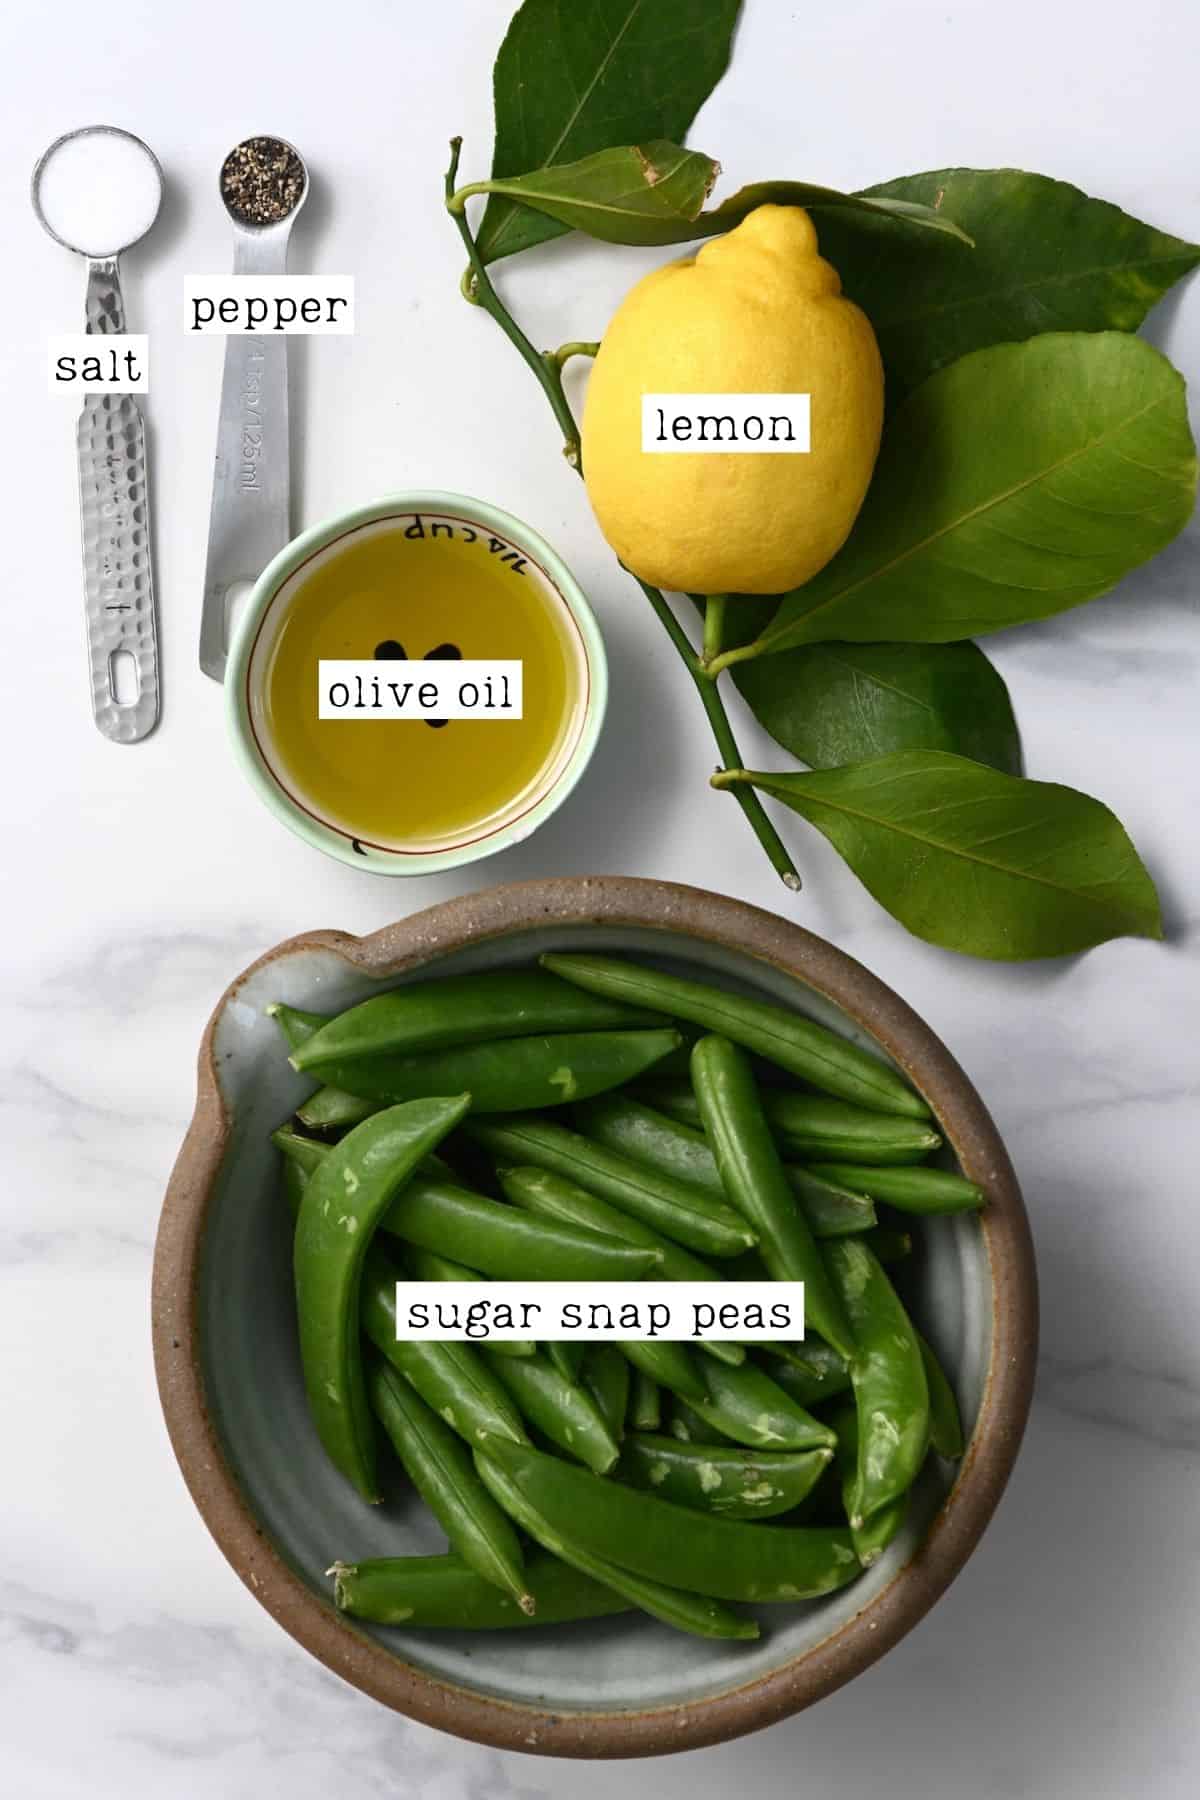 Ingredients for sautéed sugar snap peas